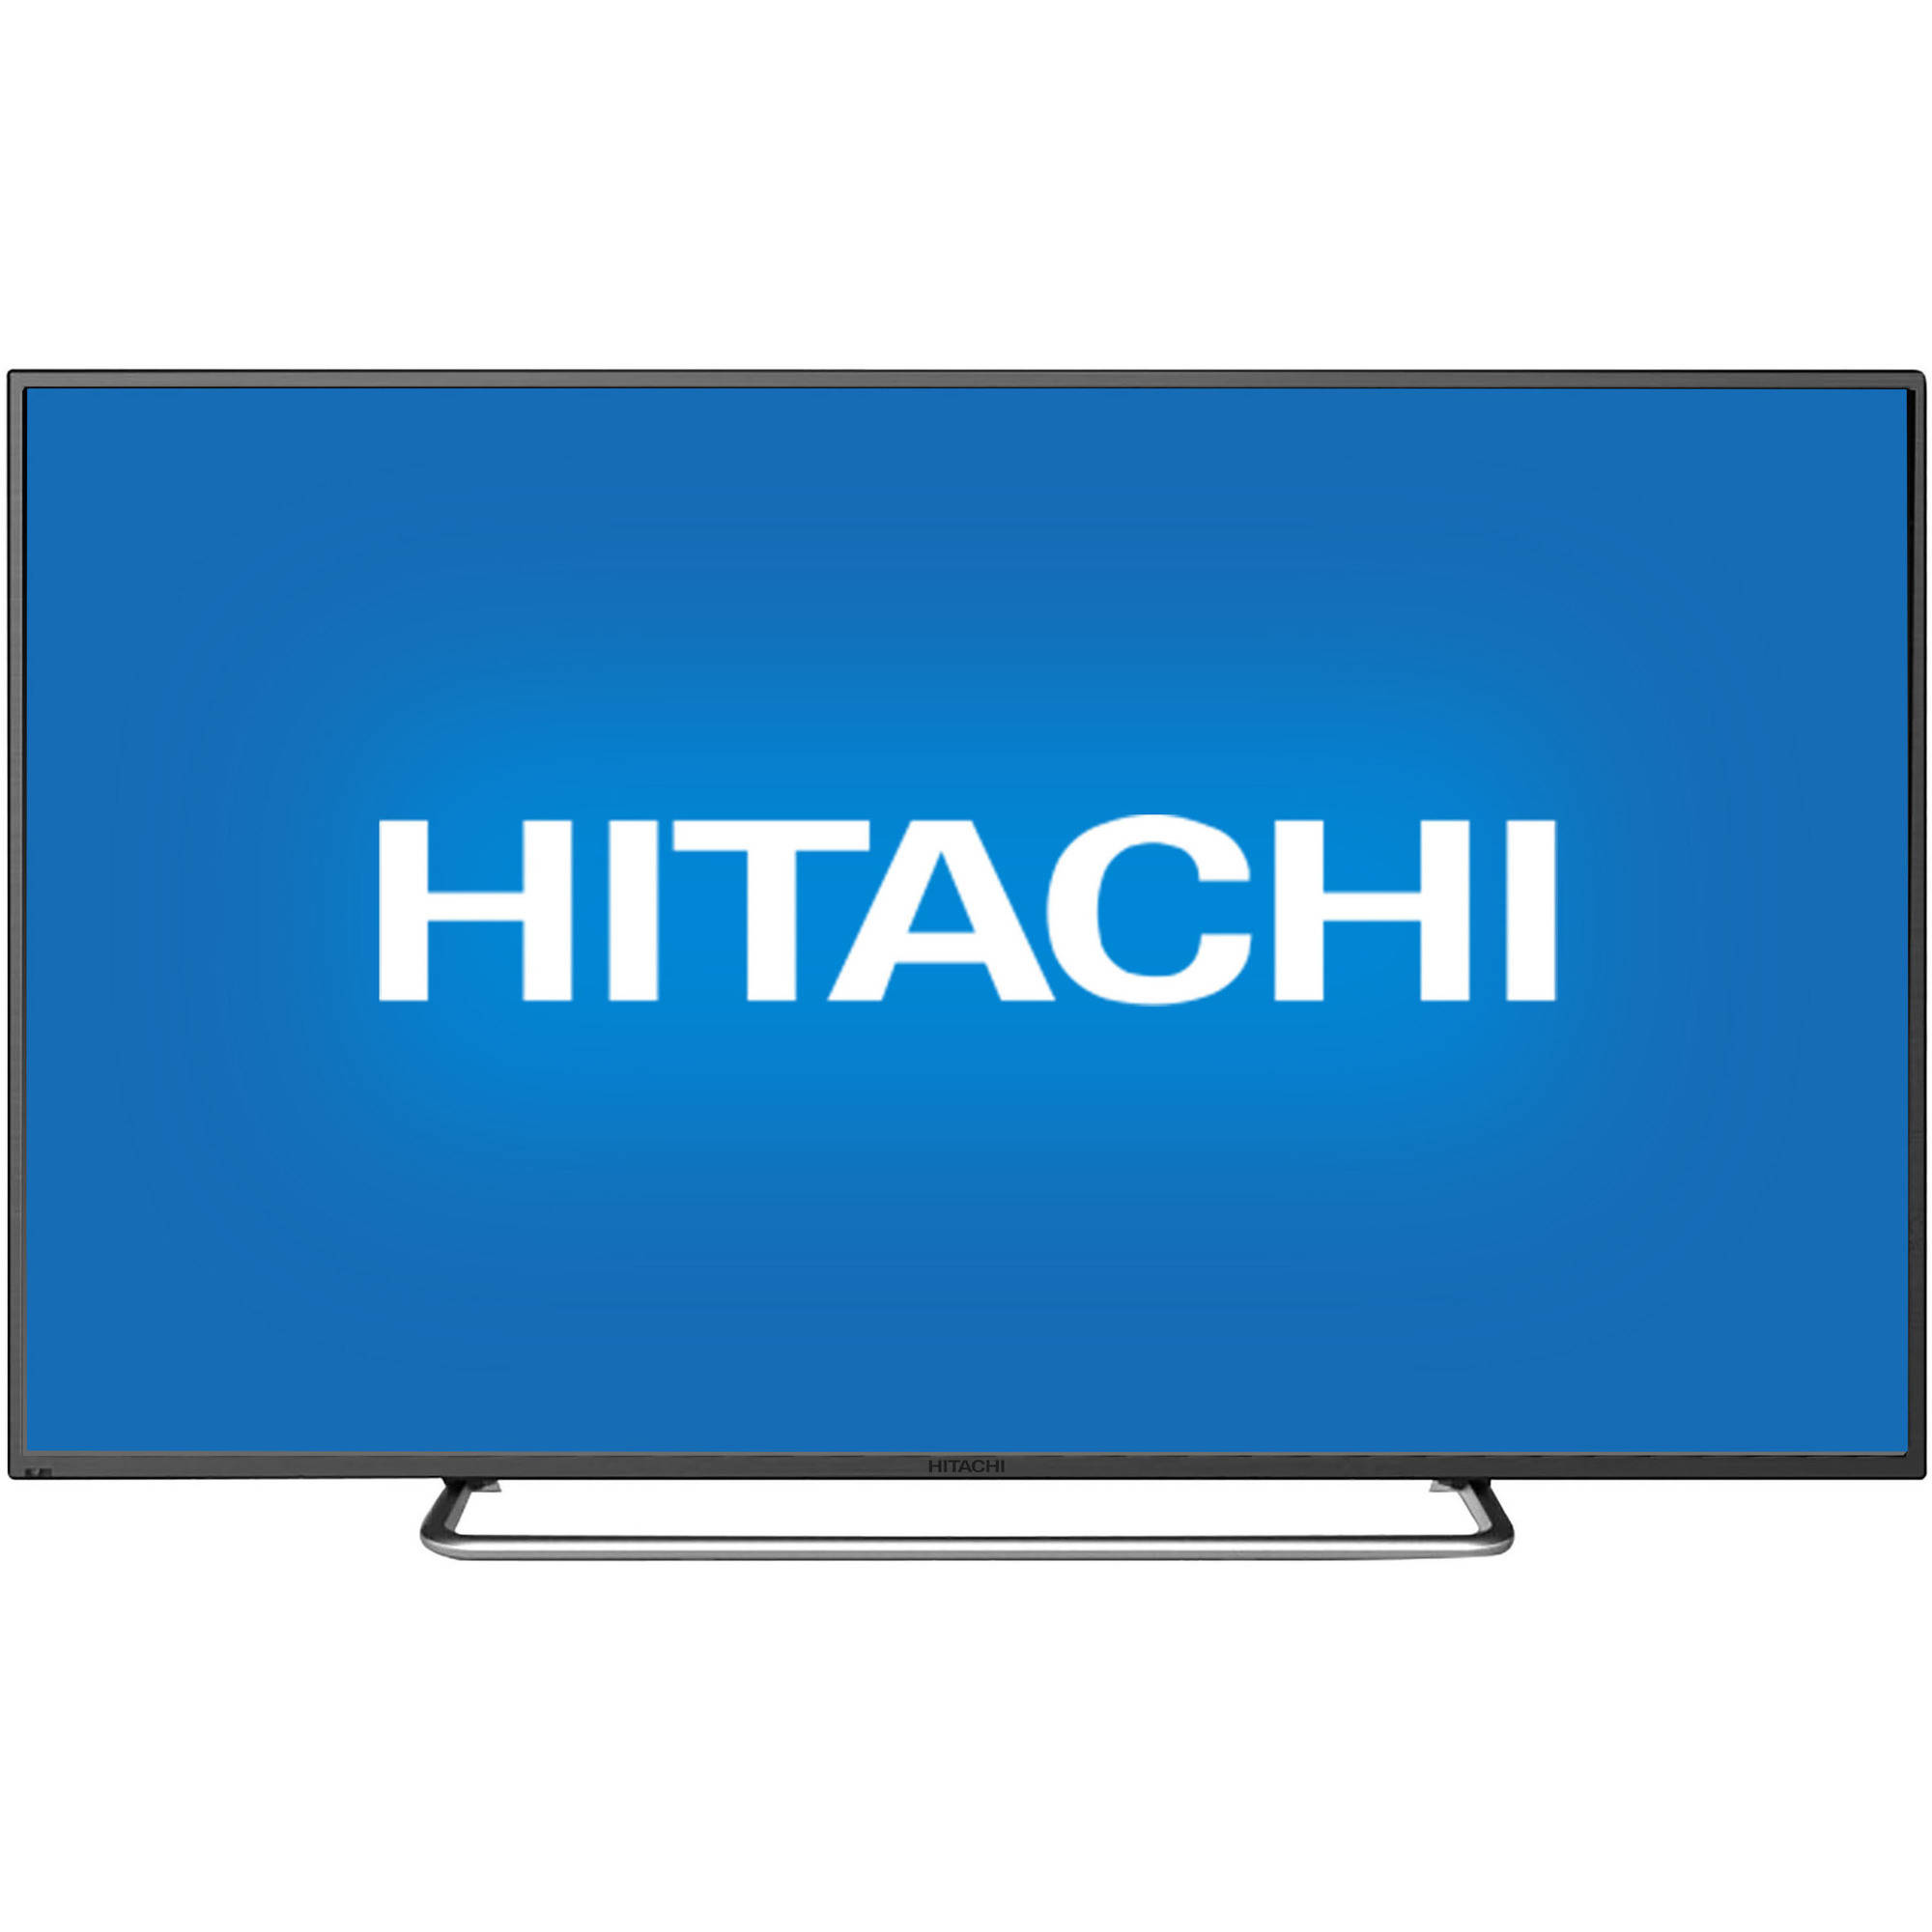 Hitachi 65" Class Alpha Series - Full HD, LED TV - 1080p, 60Hz (LE65K6R9) - image 1 of 5